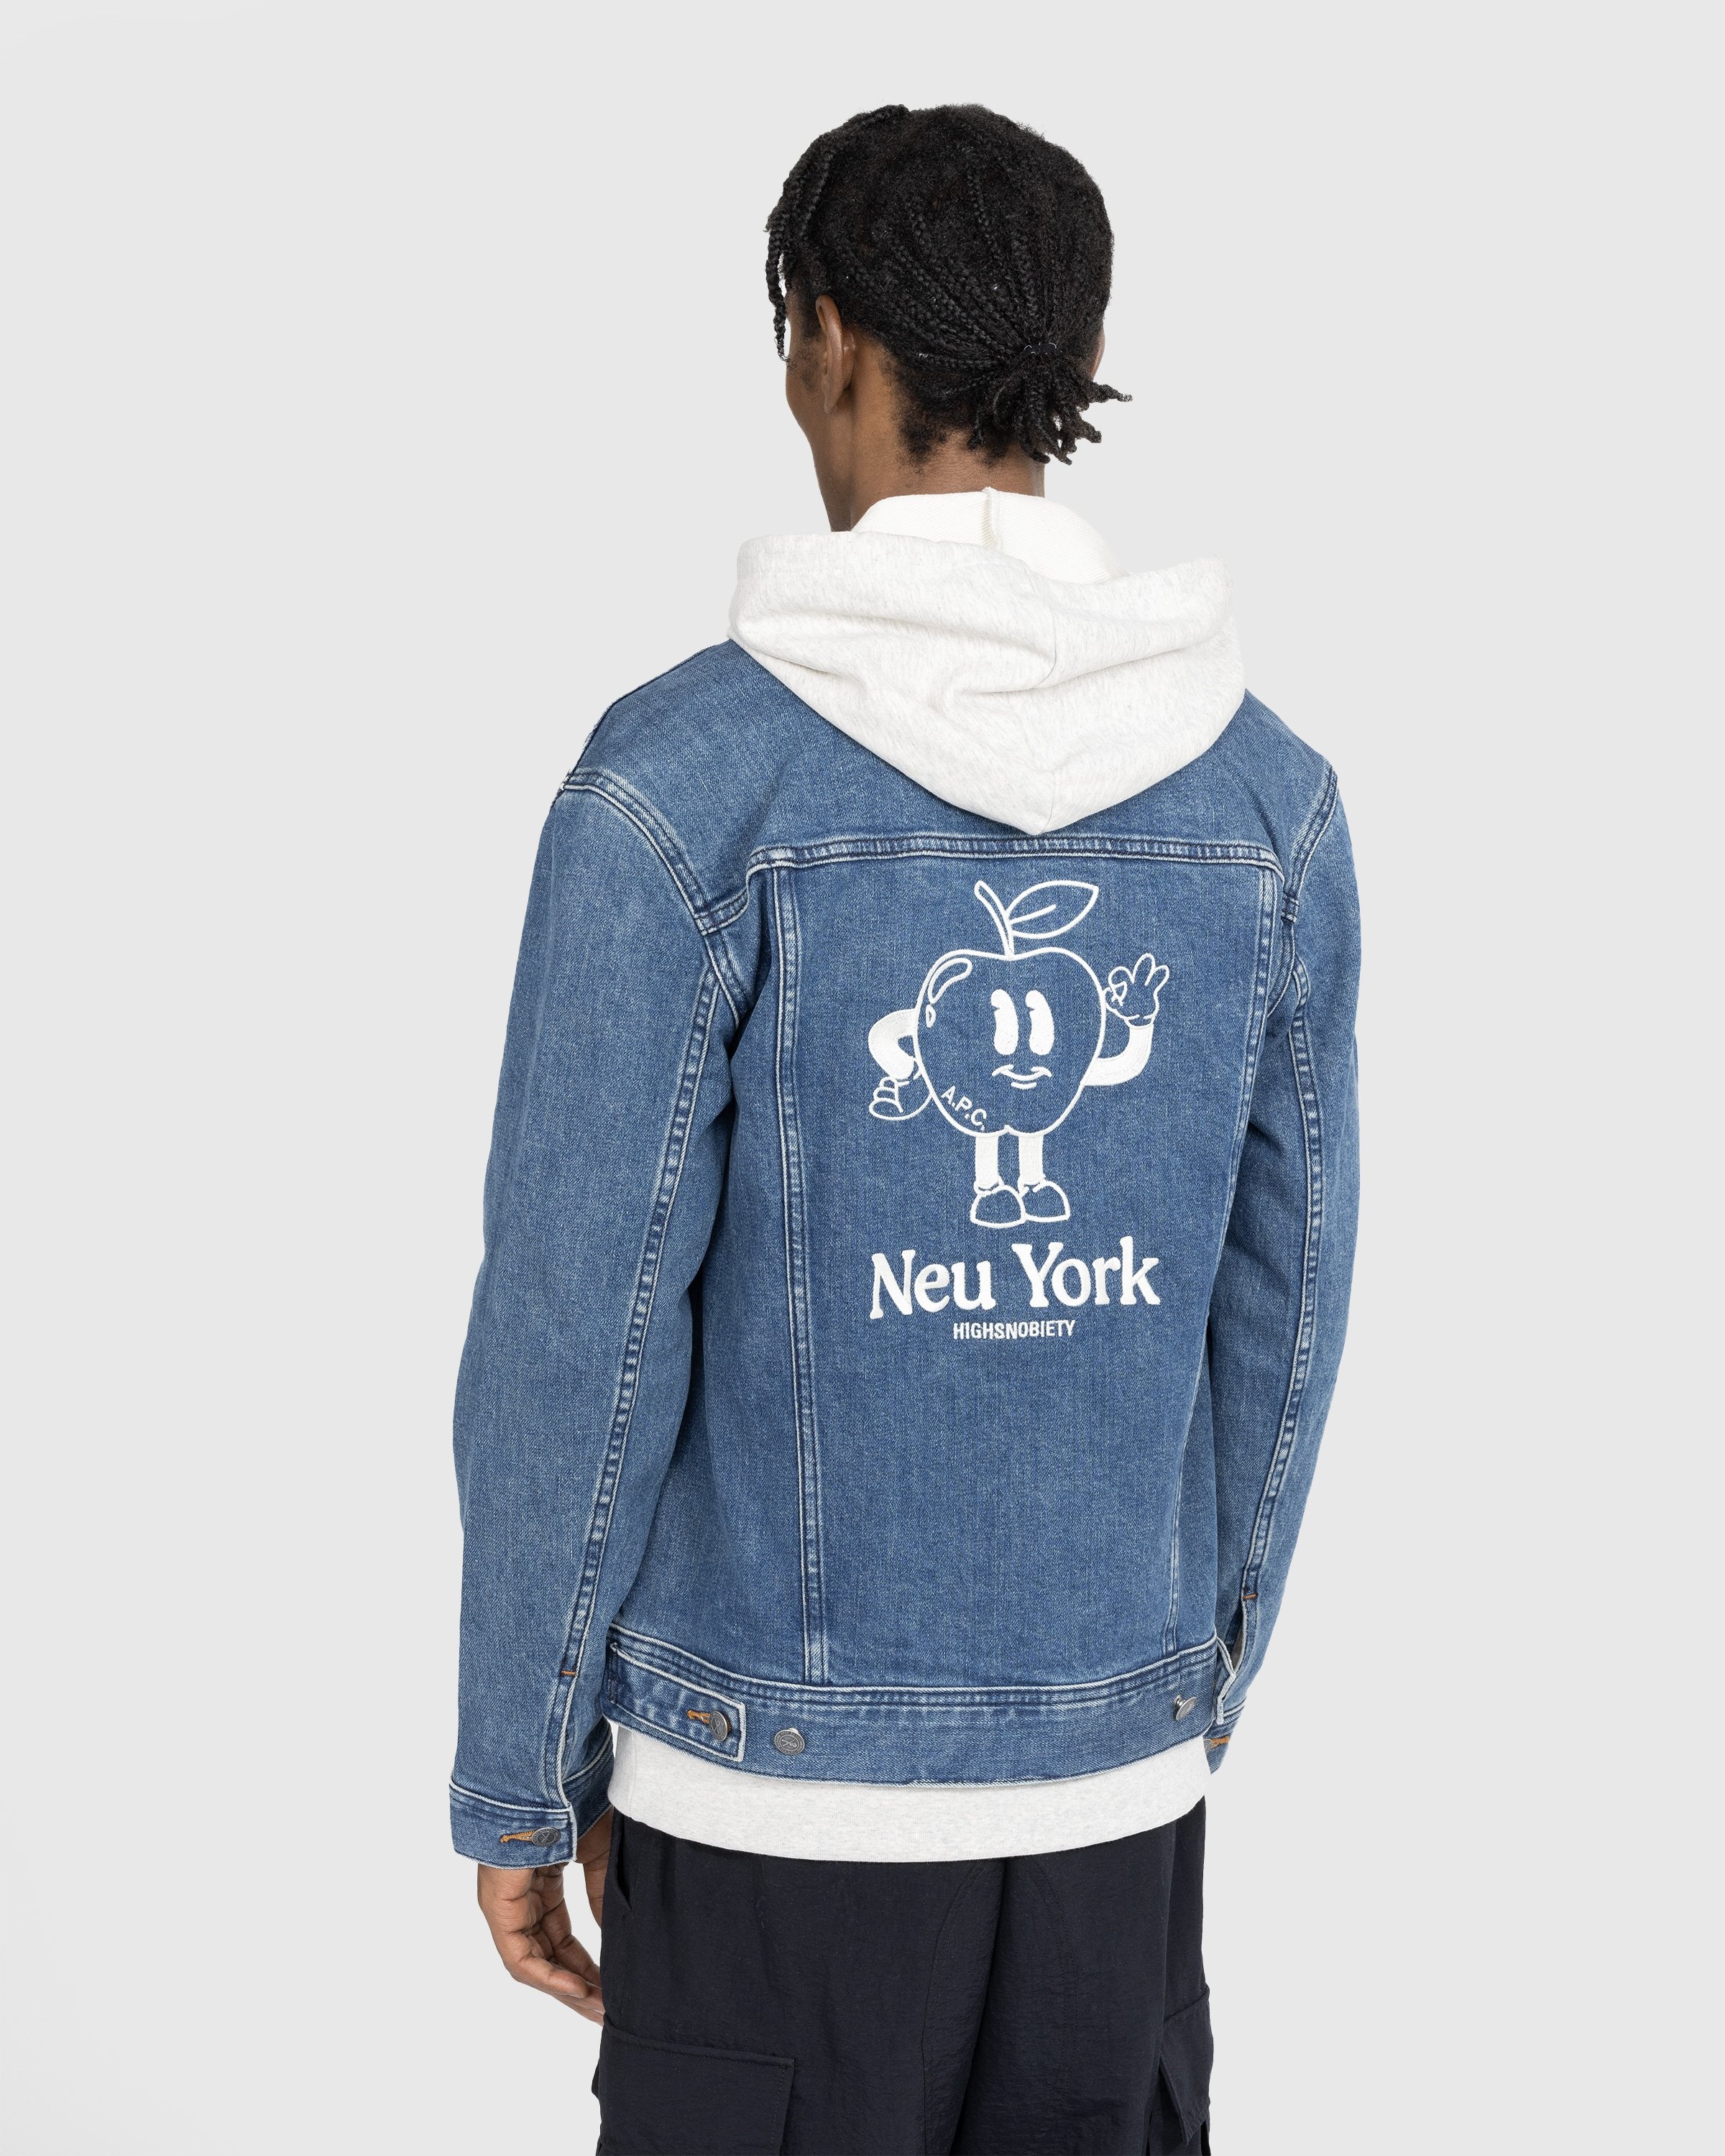 A.P.C. x Highsnobiety – Neu York Jean Jacket Blue - Outerwear - Blue - Image 4